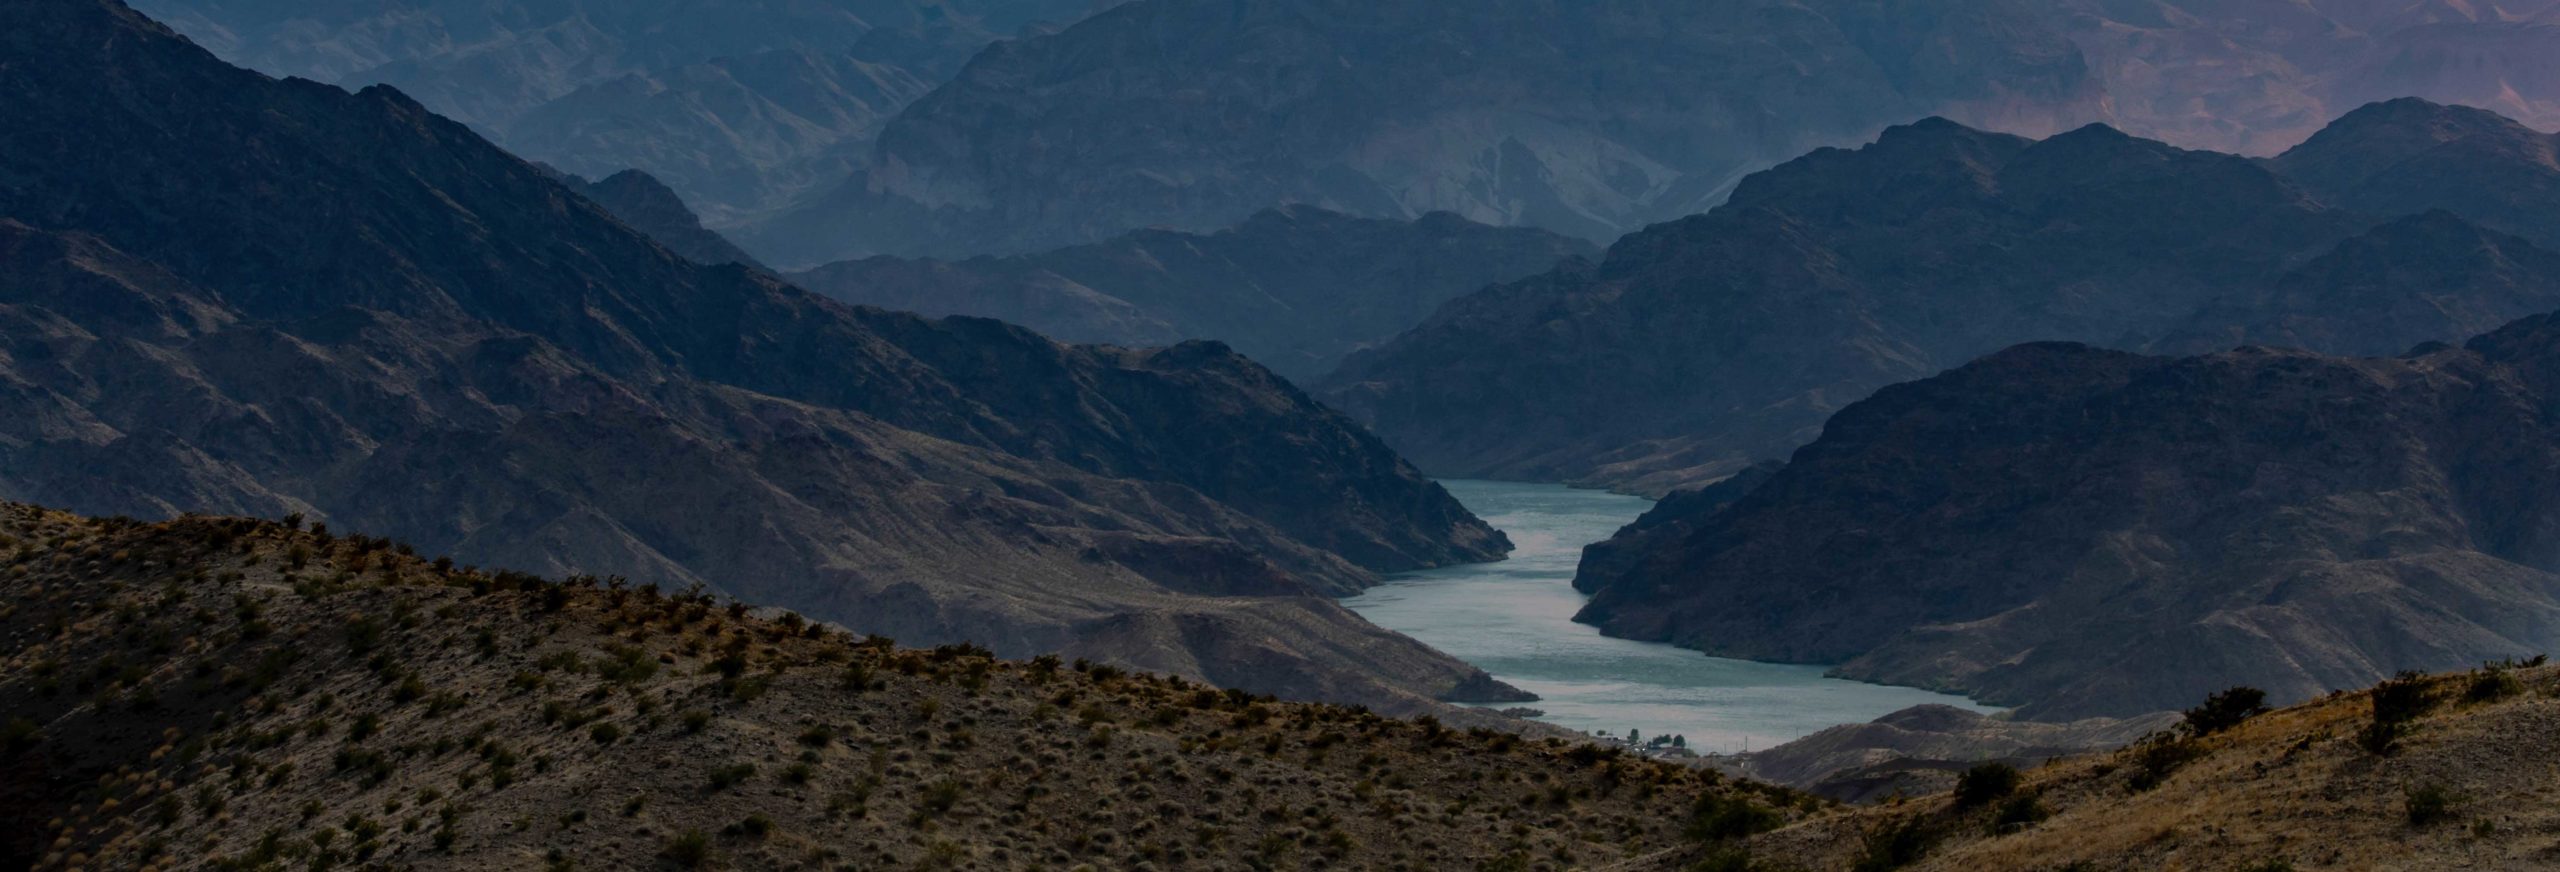 Colorado River Water Conservation